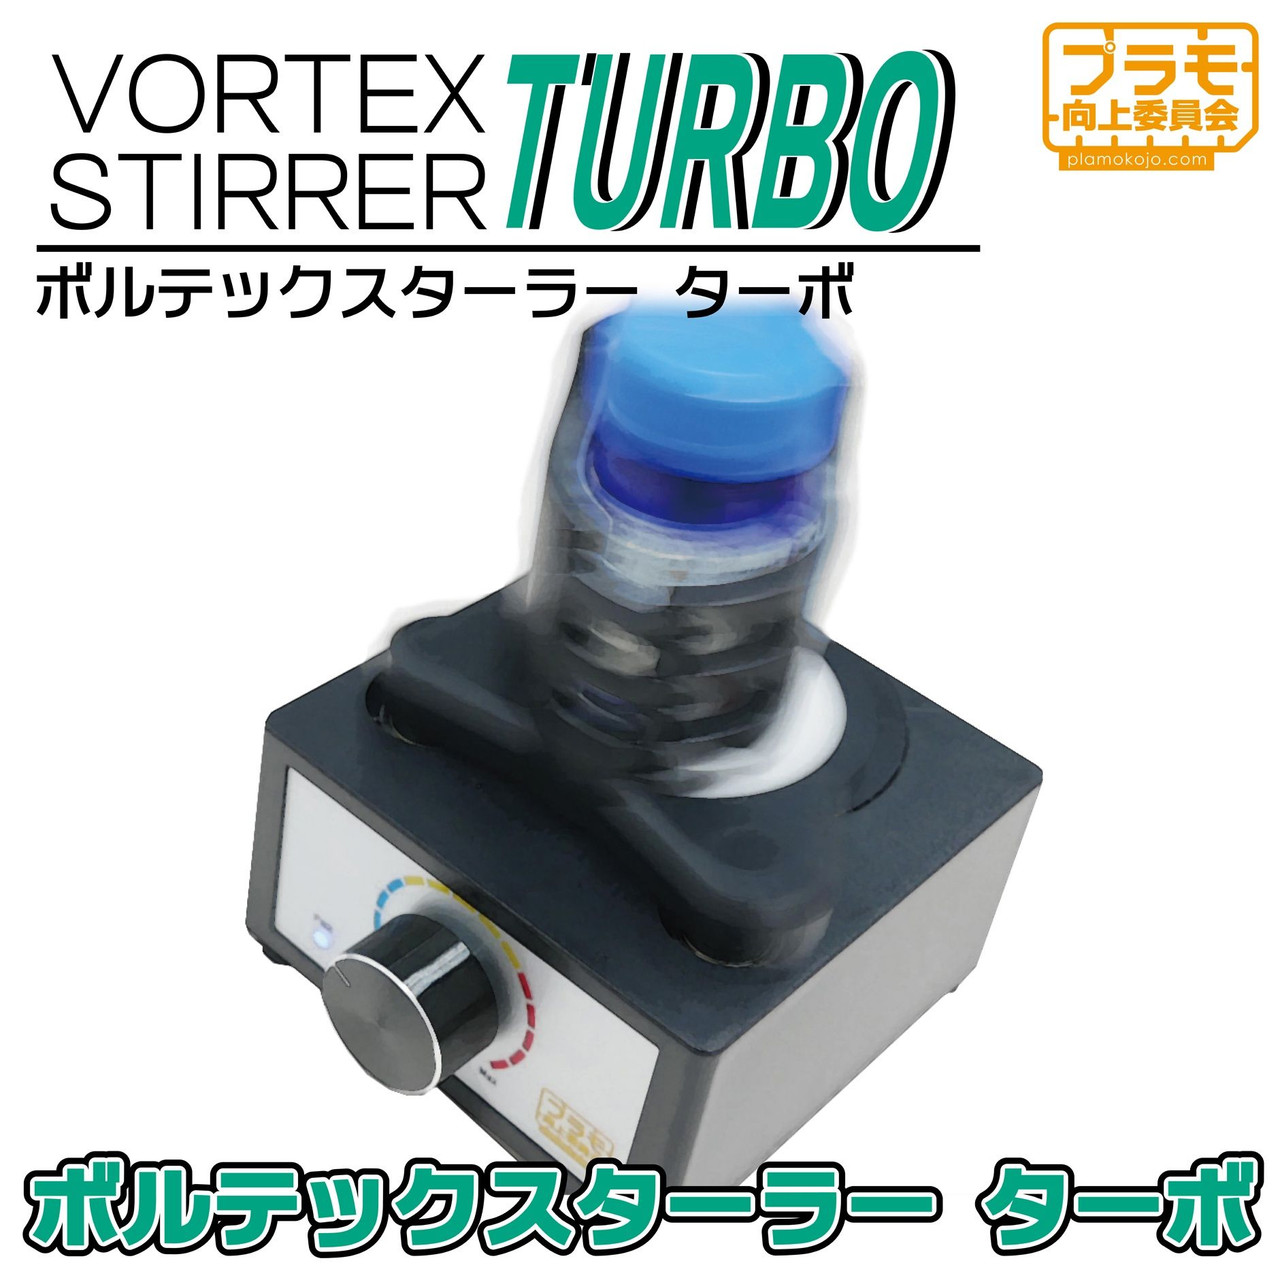 Plamokojo Voltex Stirrer Turbo Paint Mixer